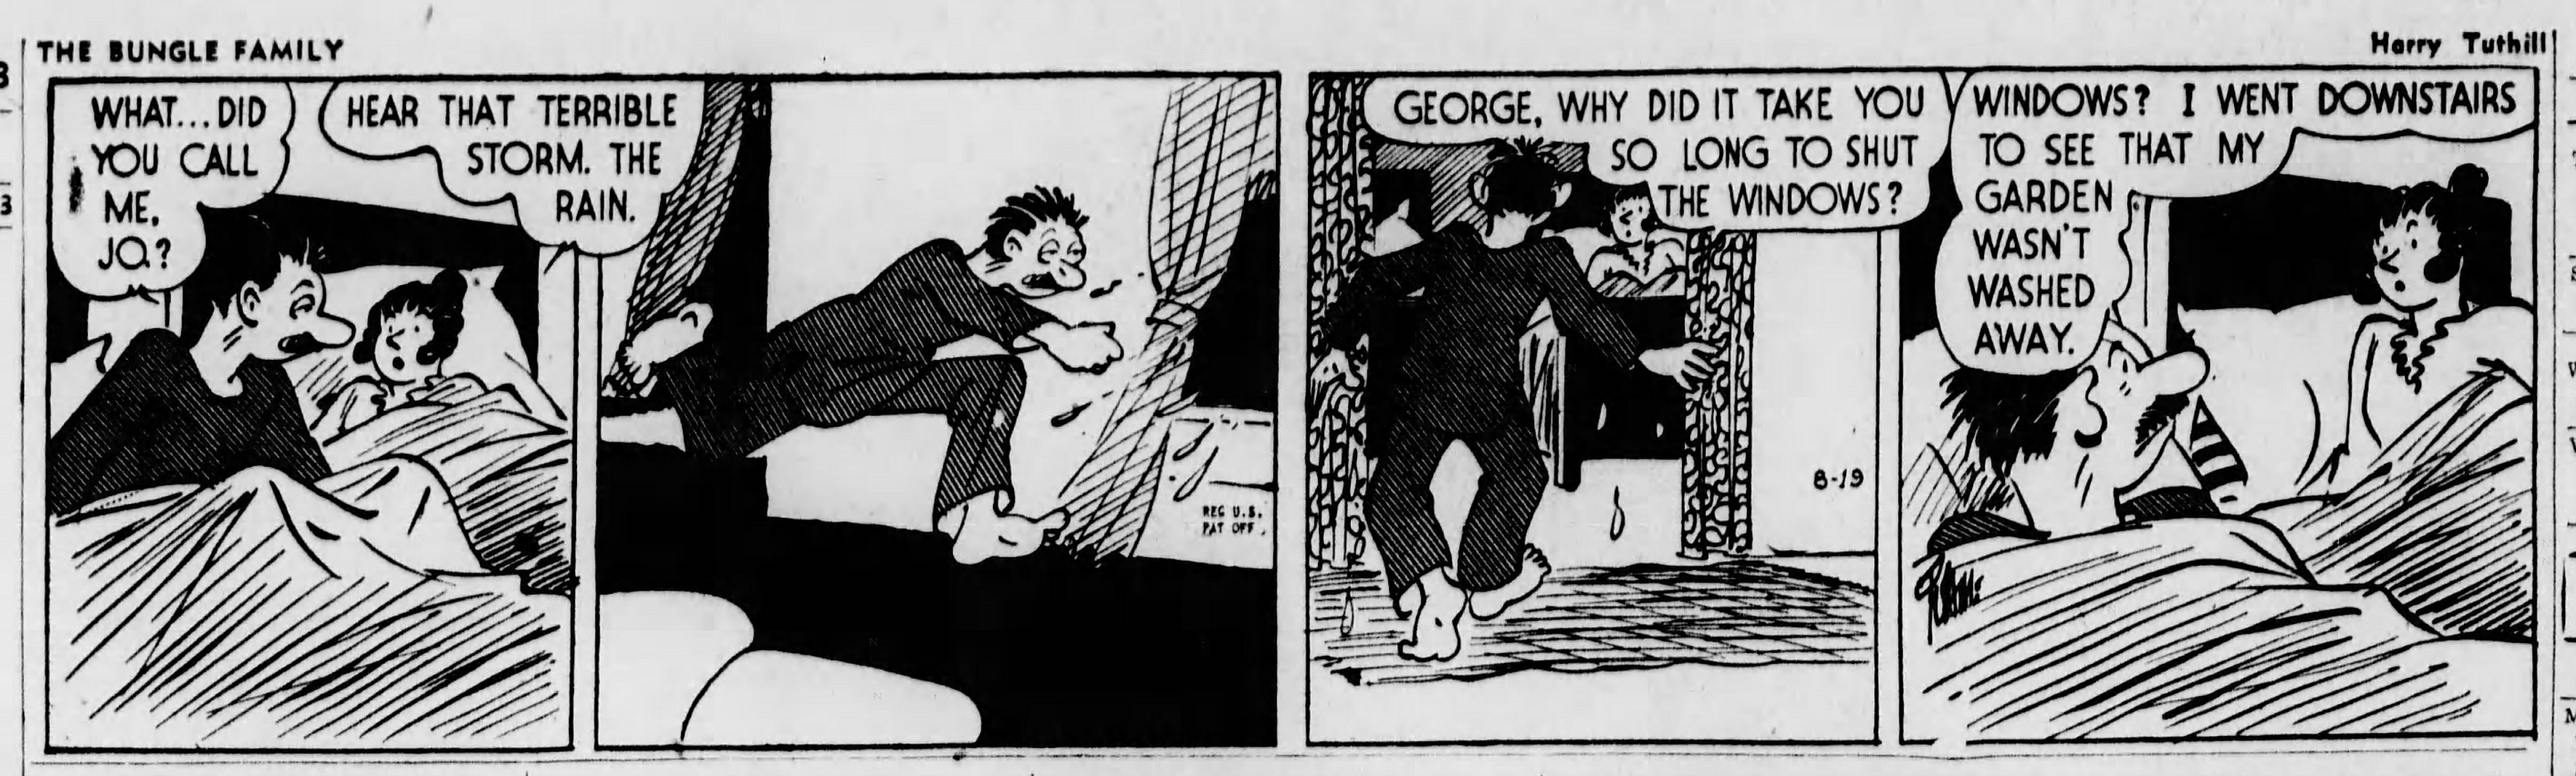 The_Brooklyn_Daily_Eagle_Thu__Aug_19__1943_(9).jpg